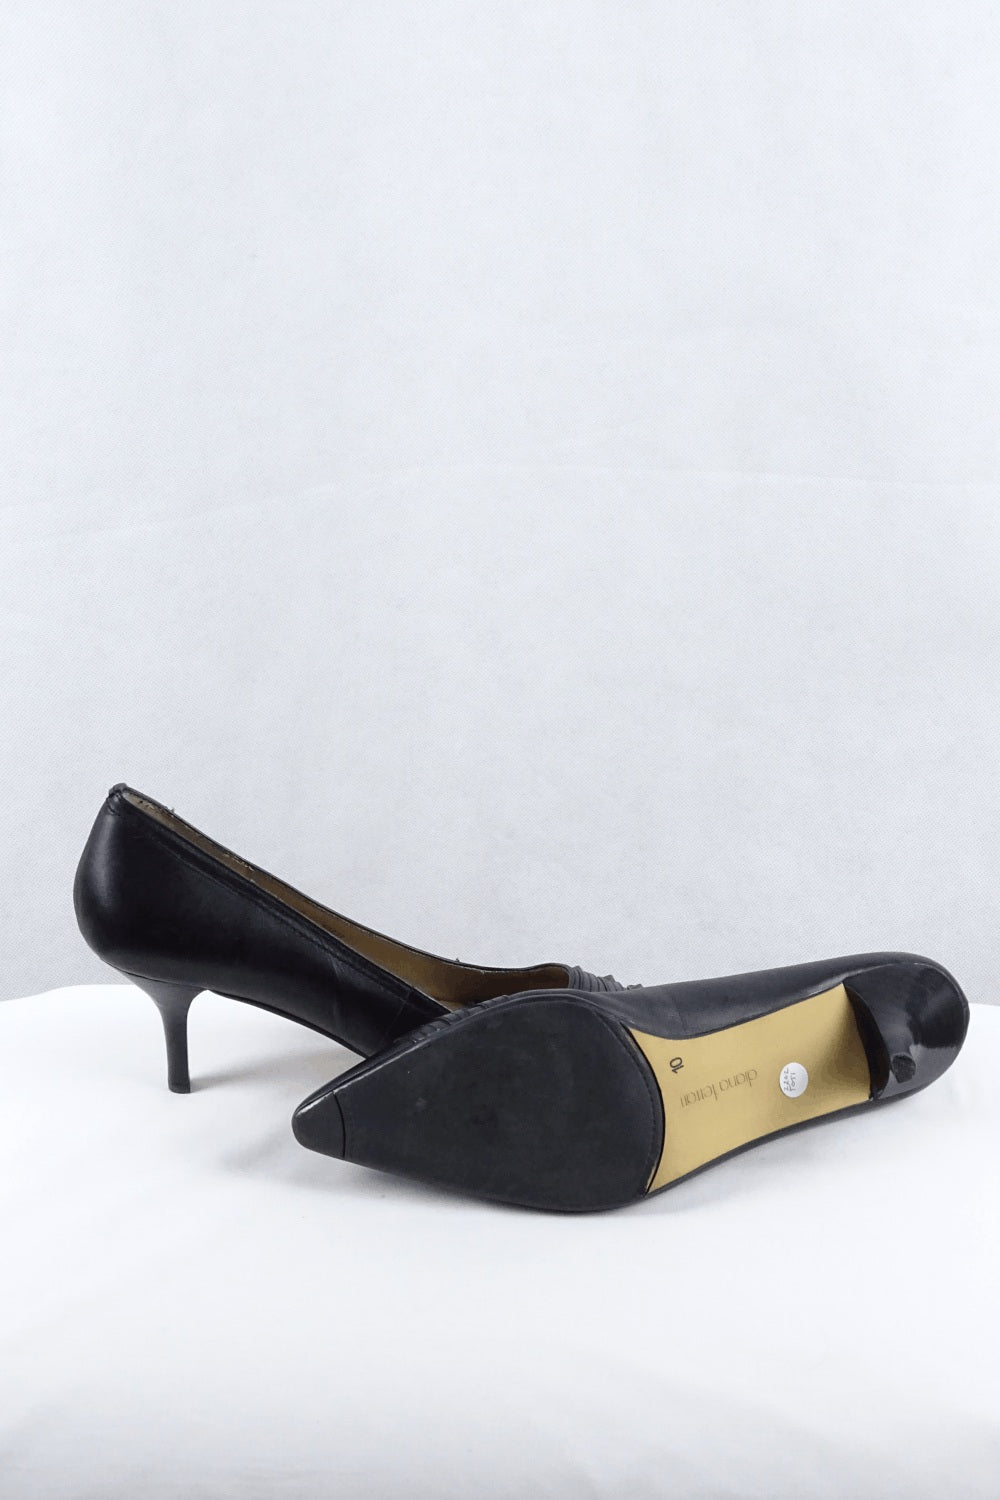 Diana Ferrari Black Stilettos 10